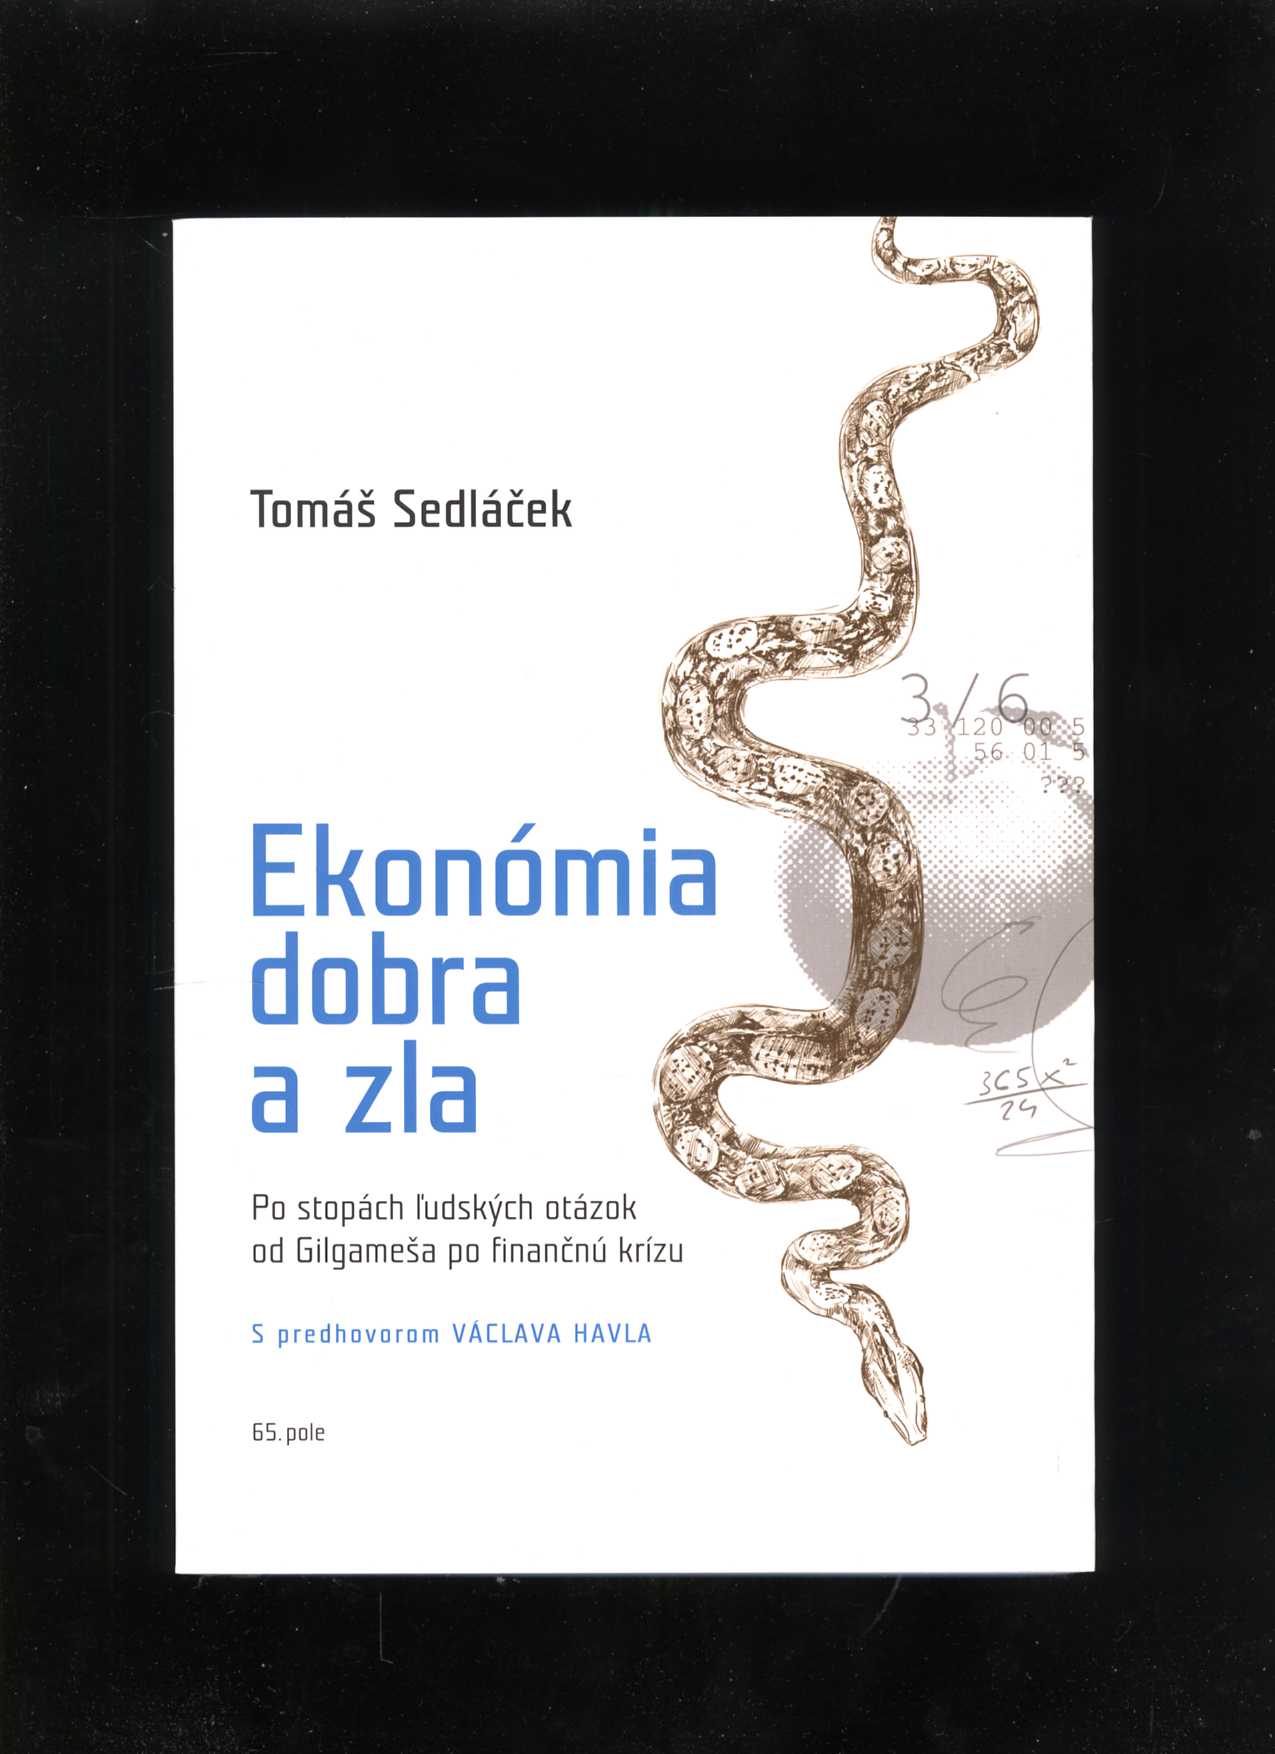 Ekonómia dobra a zla (Tomáš Sedláček)